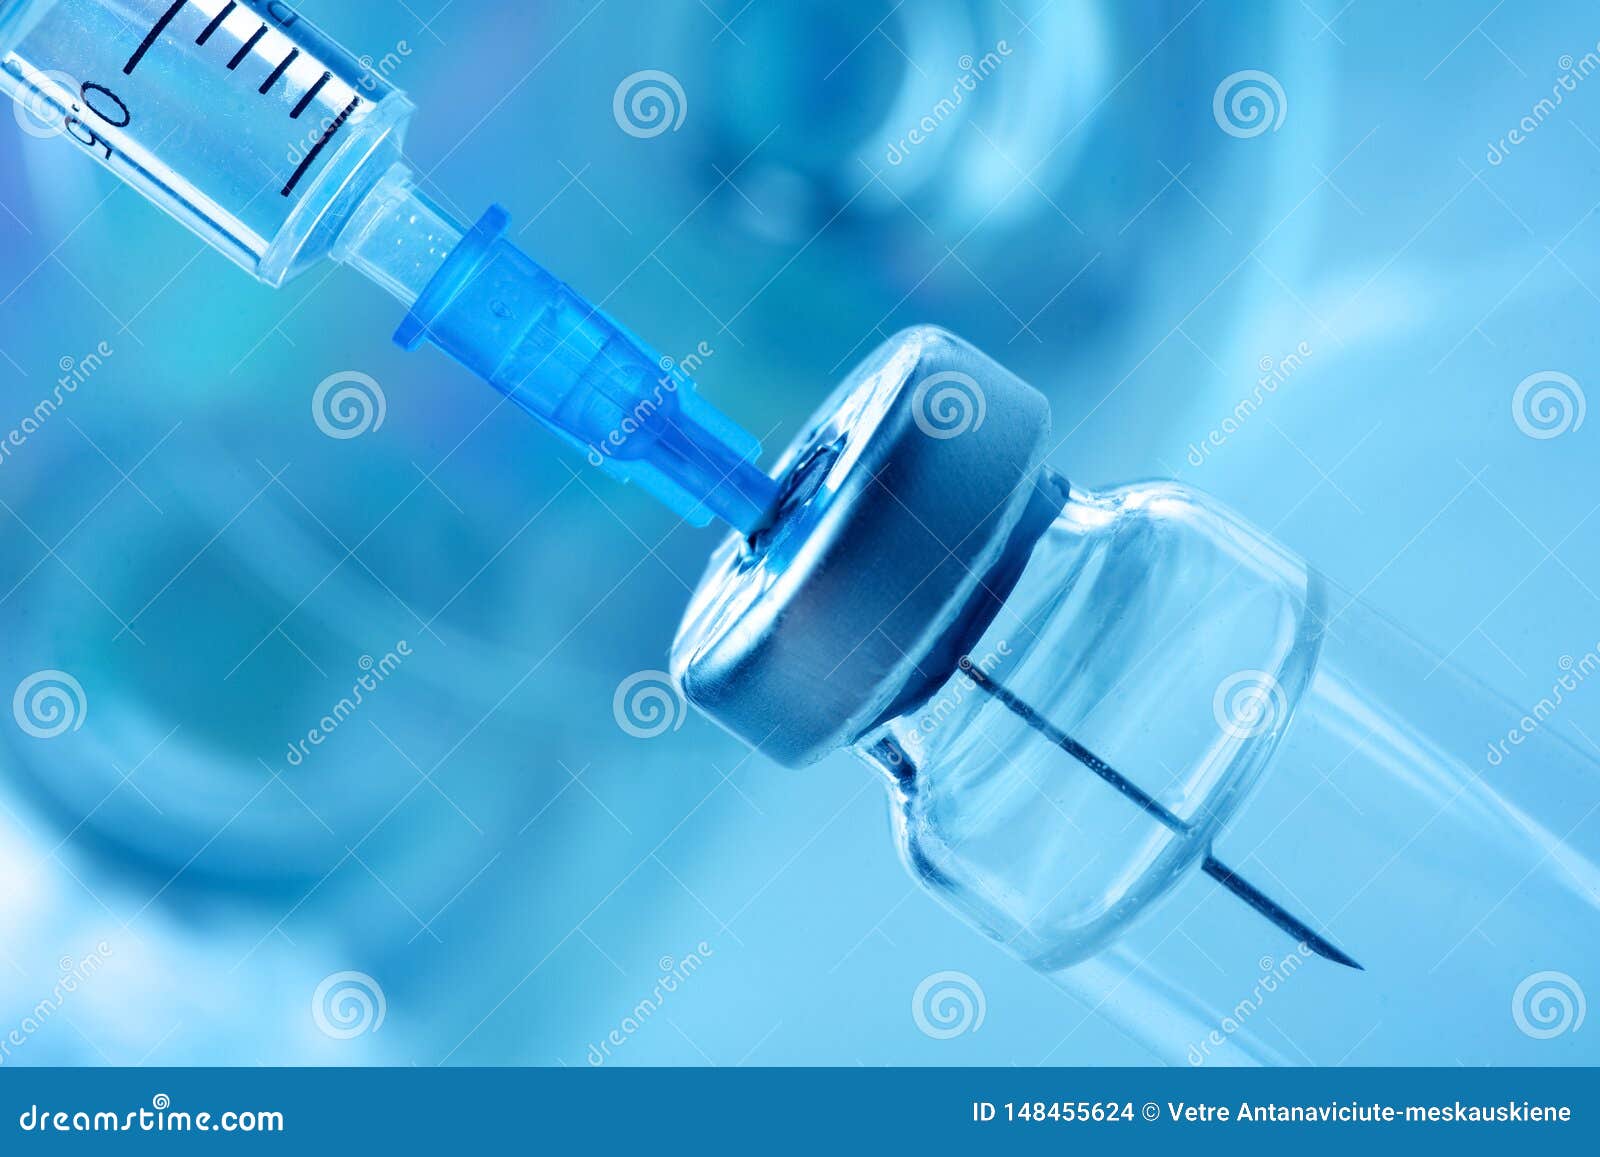 vaccine vial dose flu shot drug needle syringe,medical concept vaccination hypodermic injection